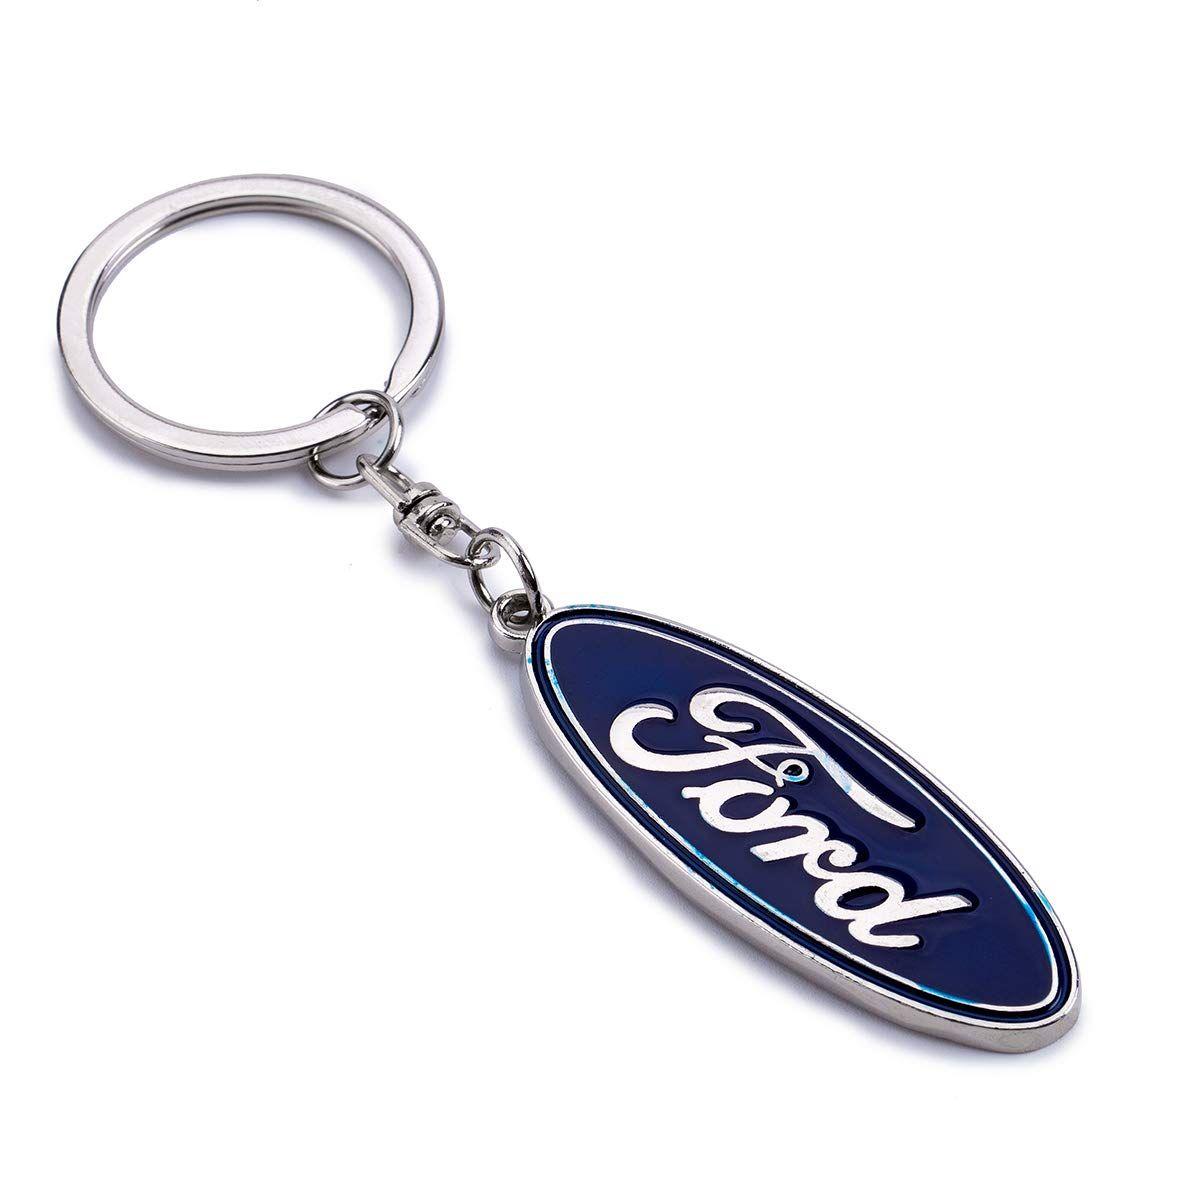 Silver Oval Car Logo - Amazon.com: QZS 3D Chrome Metal Key Chain Car Logo Key Ring, Best ...